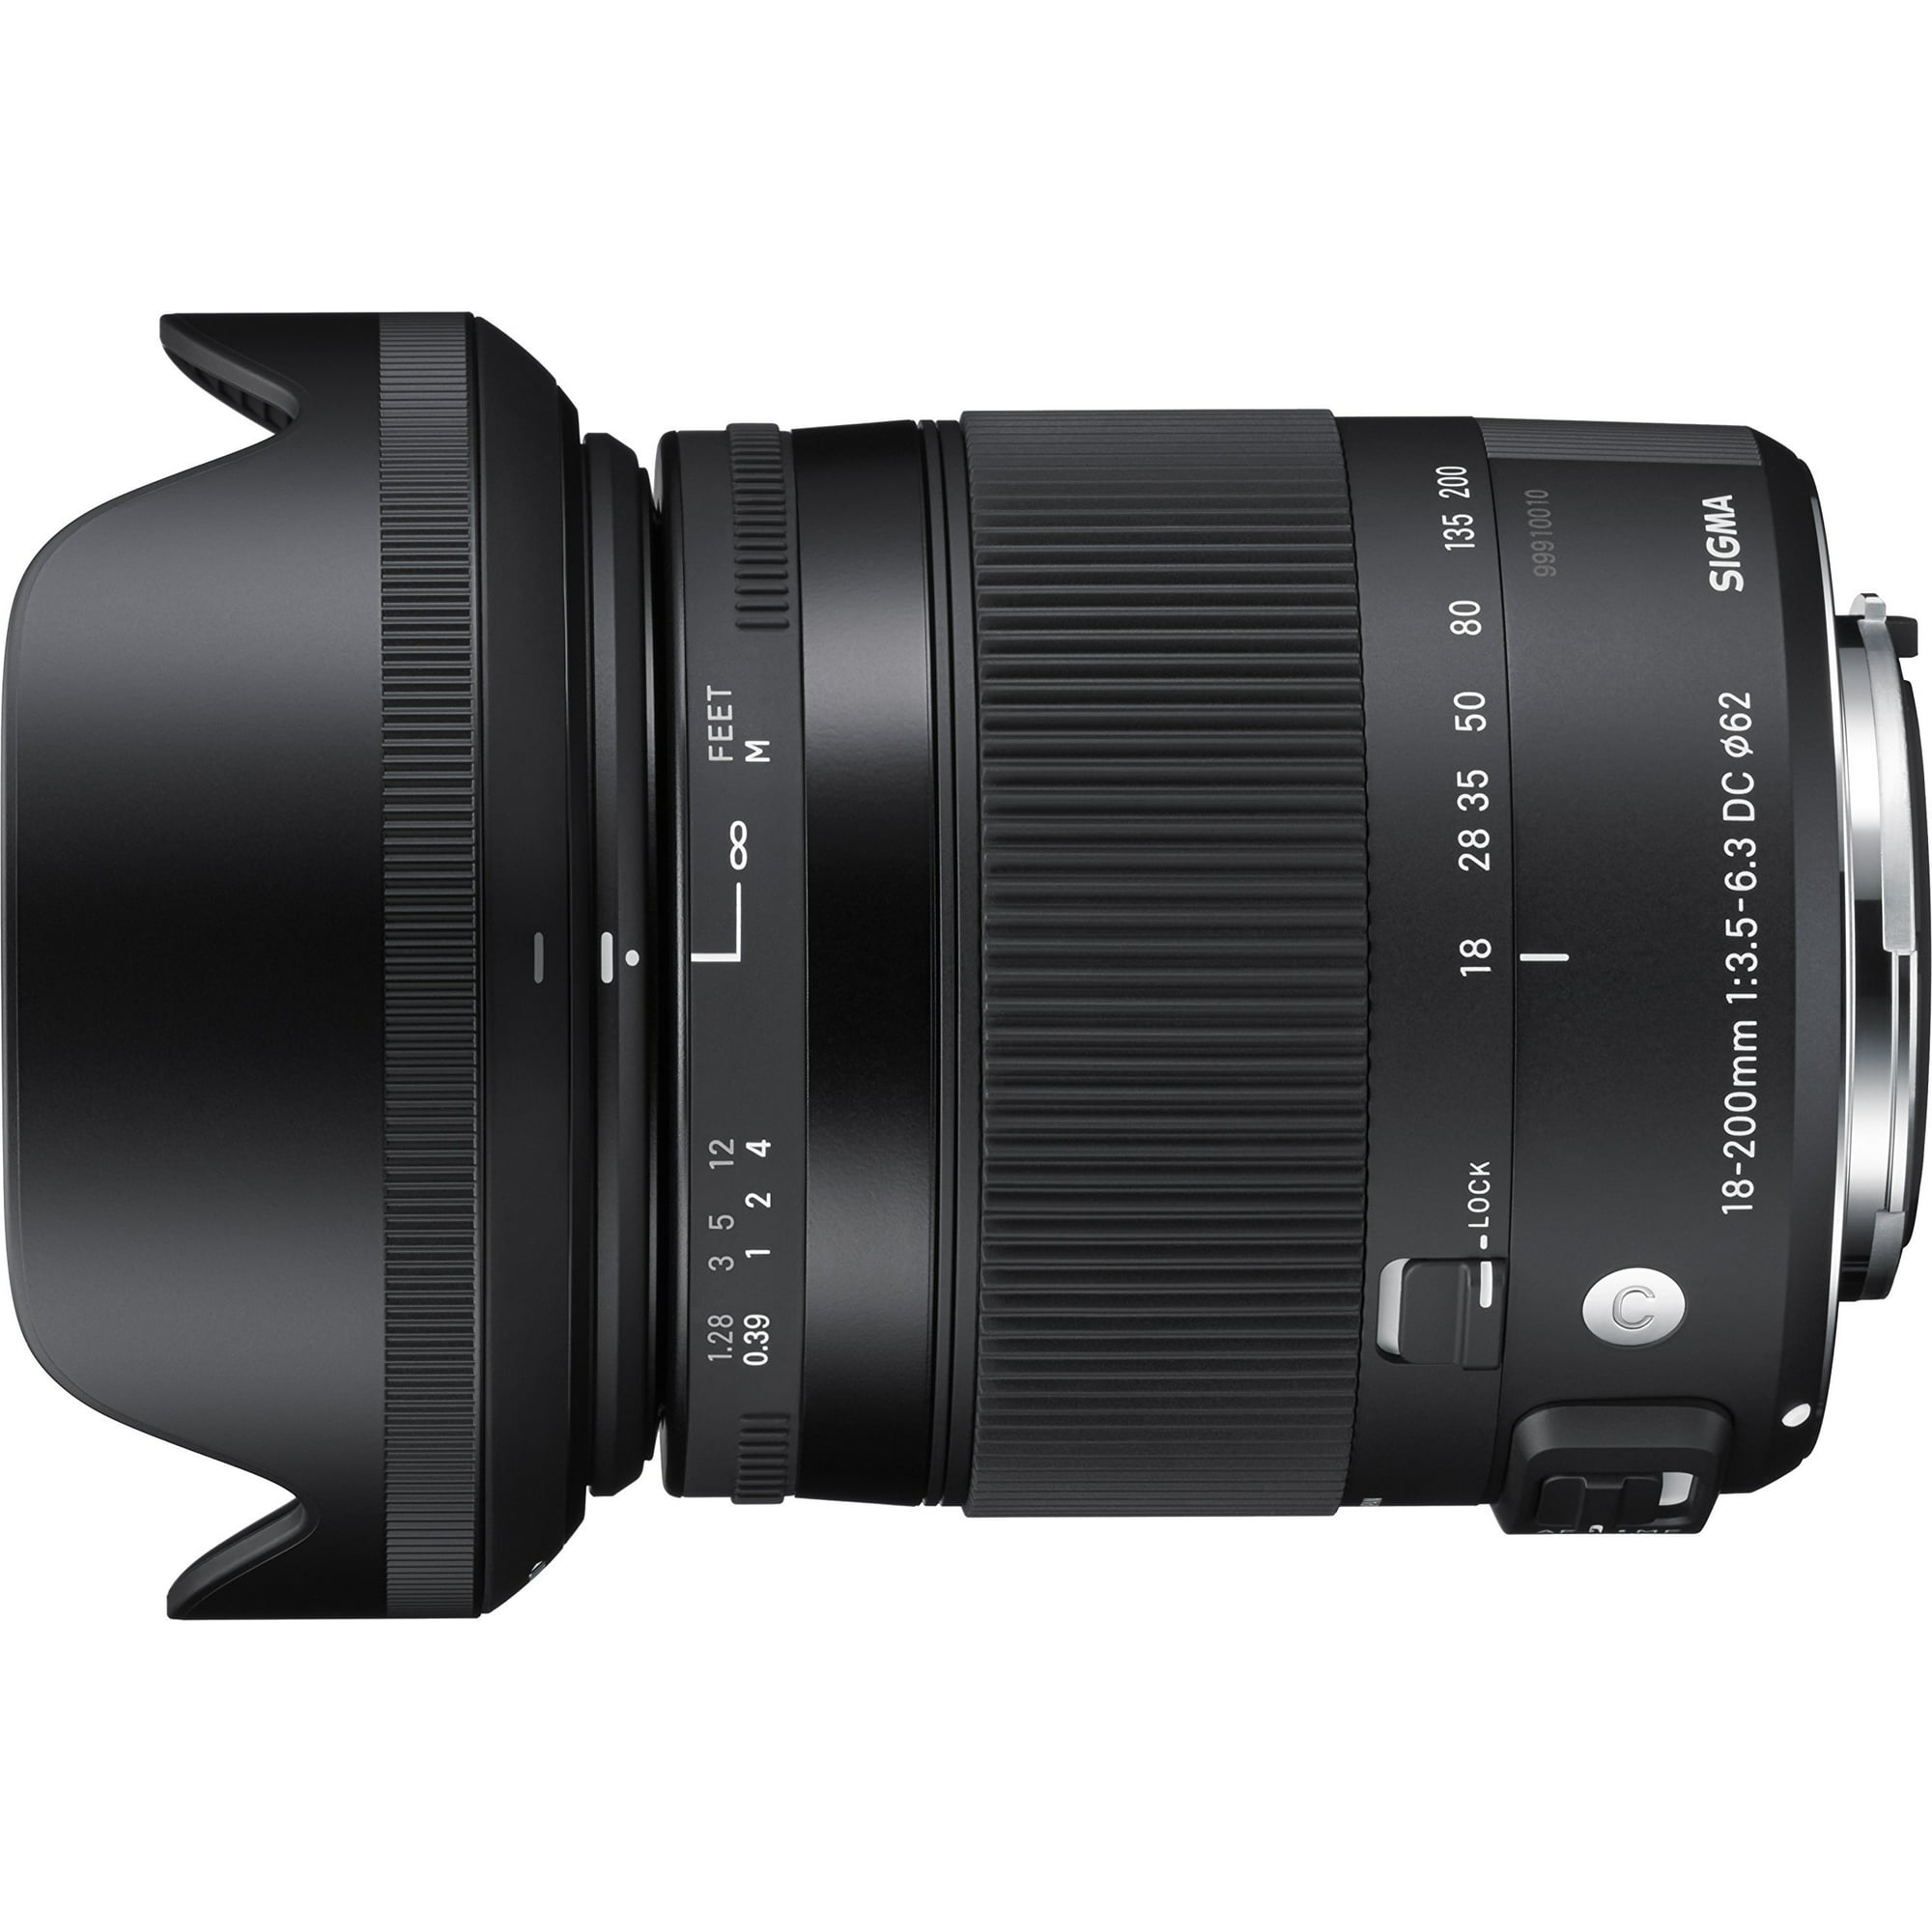 Sigma 18-200mm F3.5-6.3 Contemporary DC Macro OS HSM Lens for